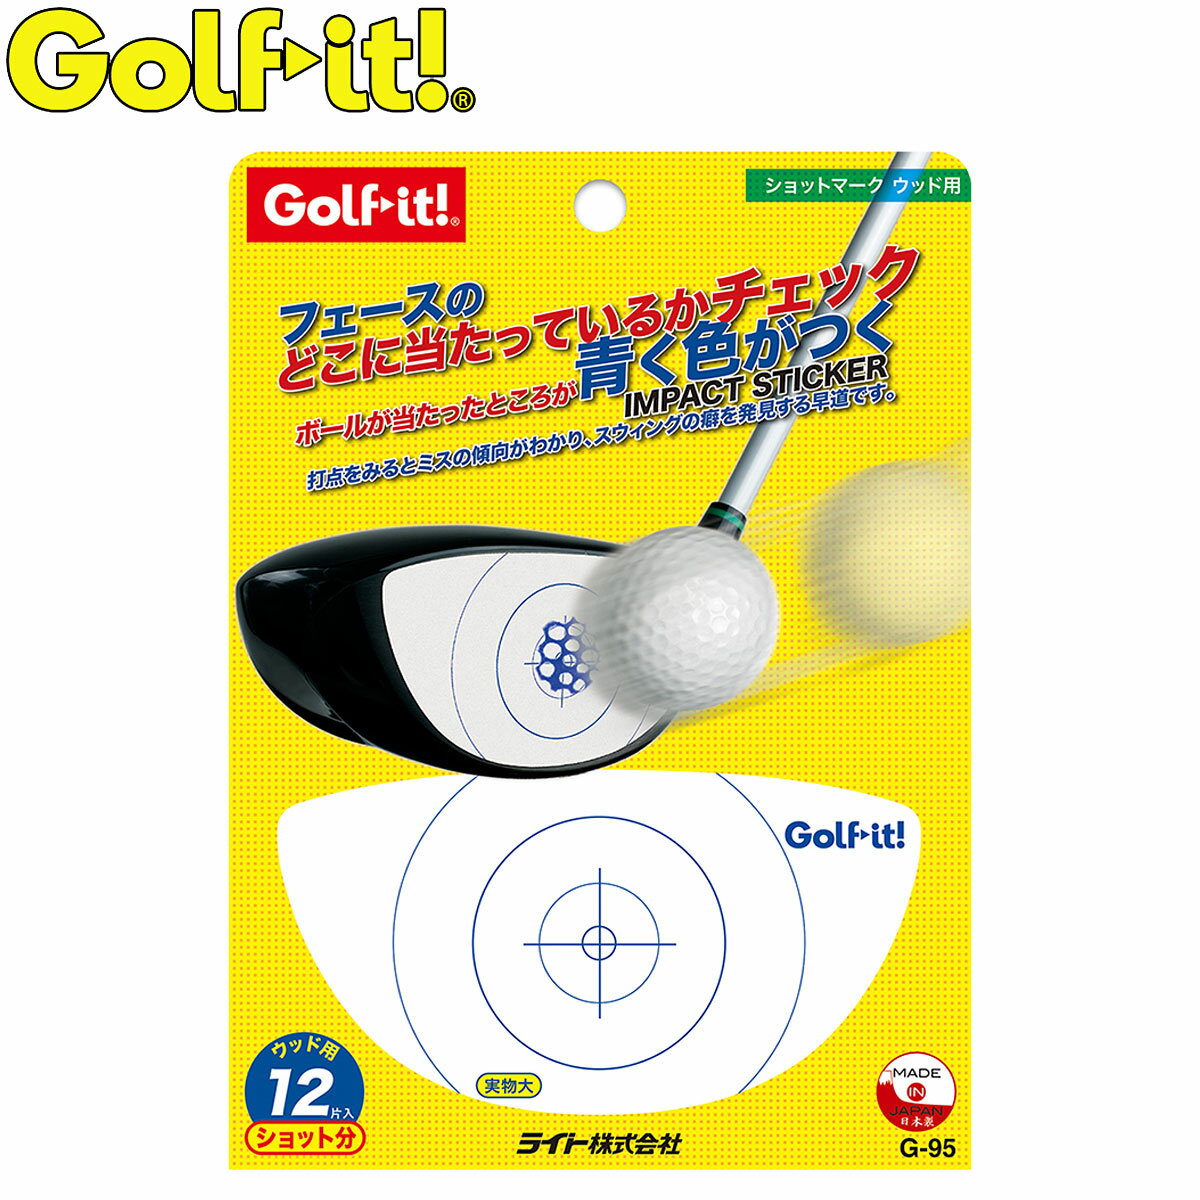 Golfit ゴルフイット ライト正規品 ショットマーク ウッド用 「G-95」 「ゴルフスイング練習用品」